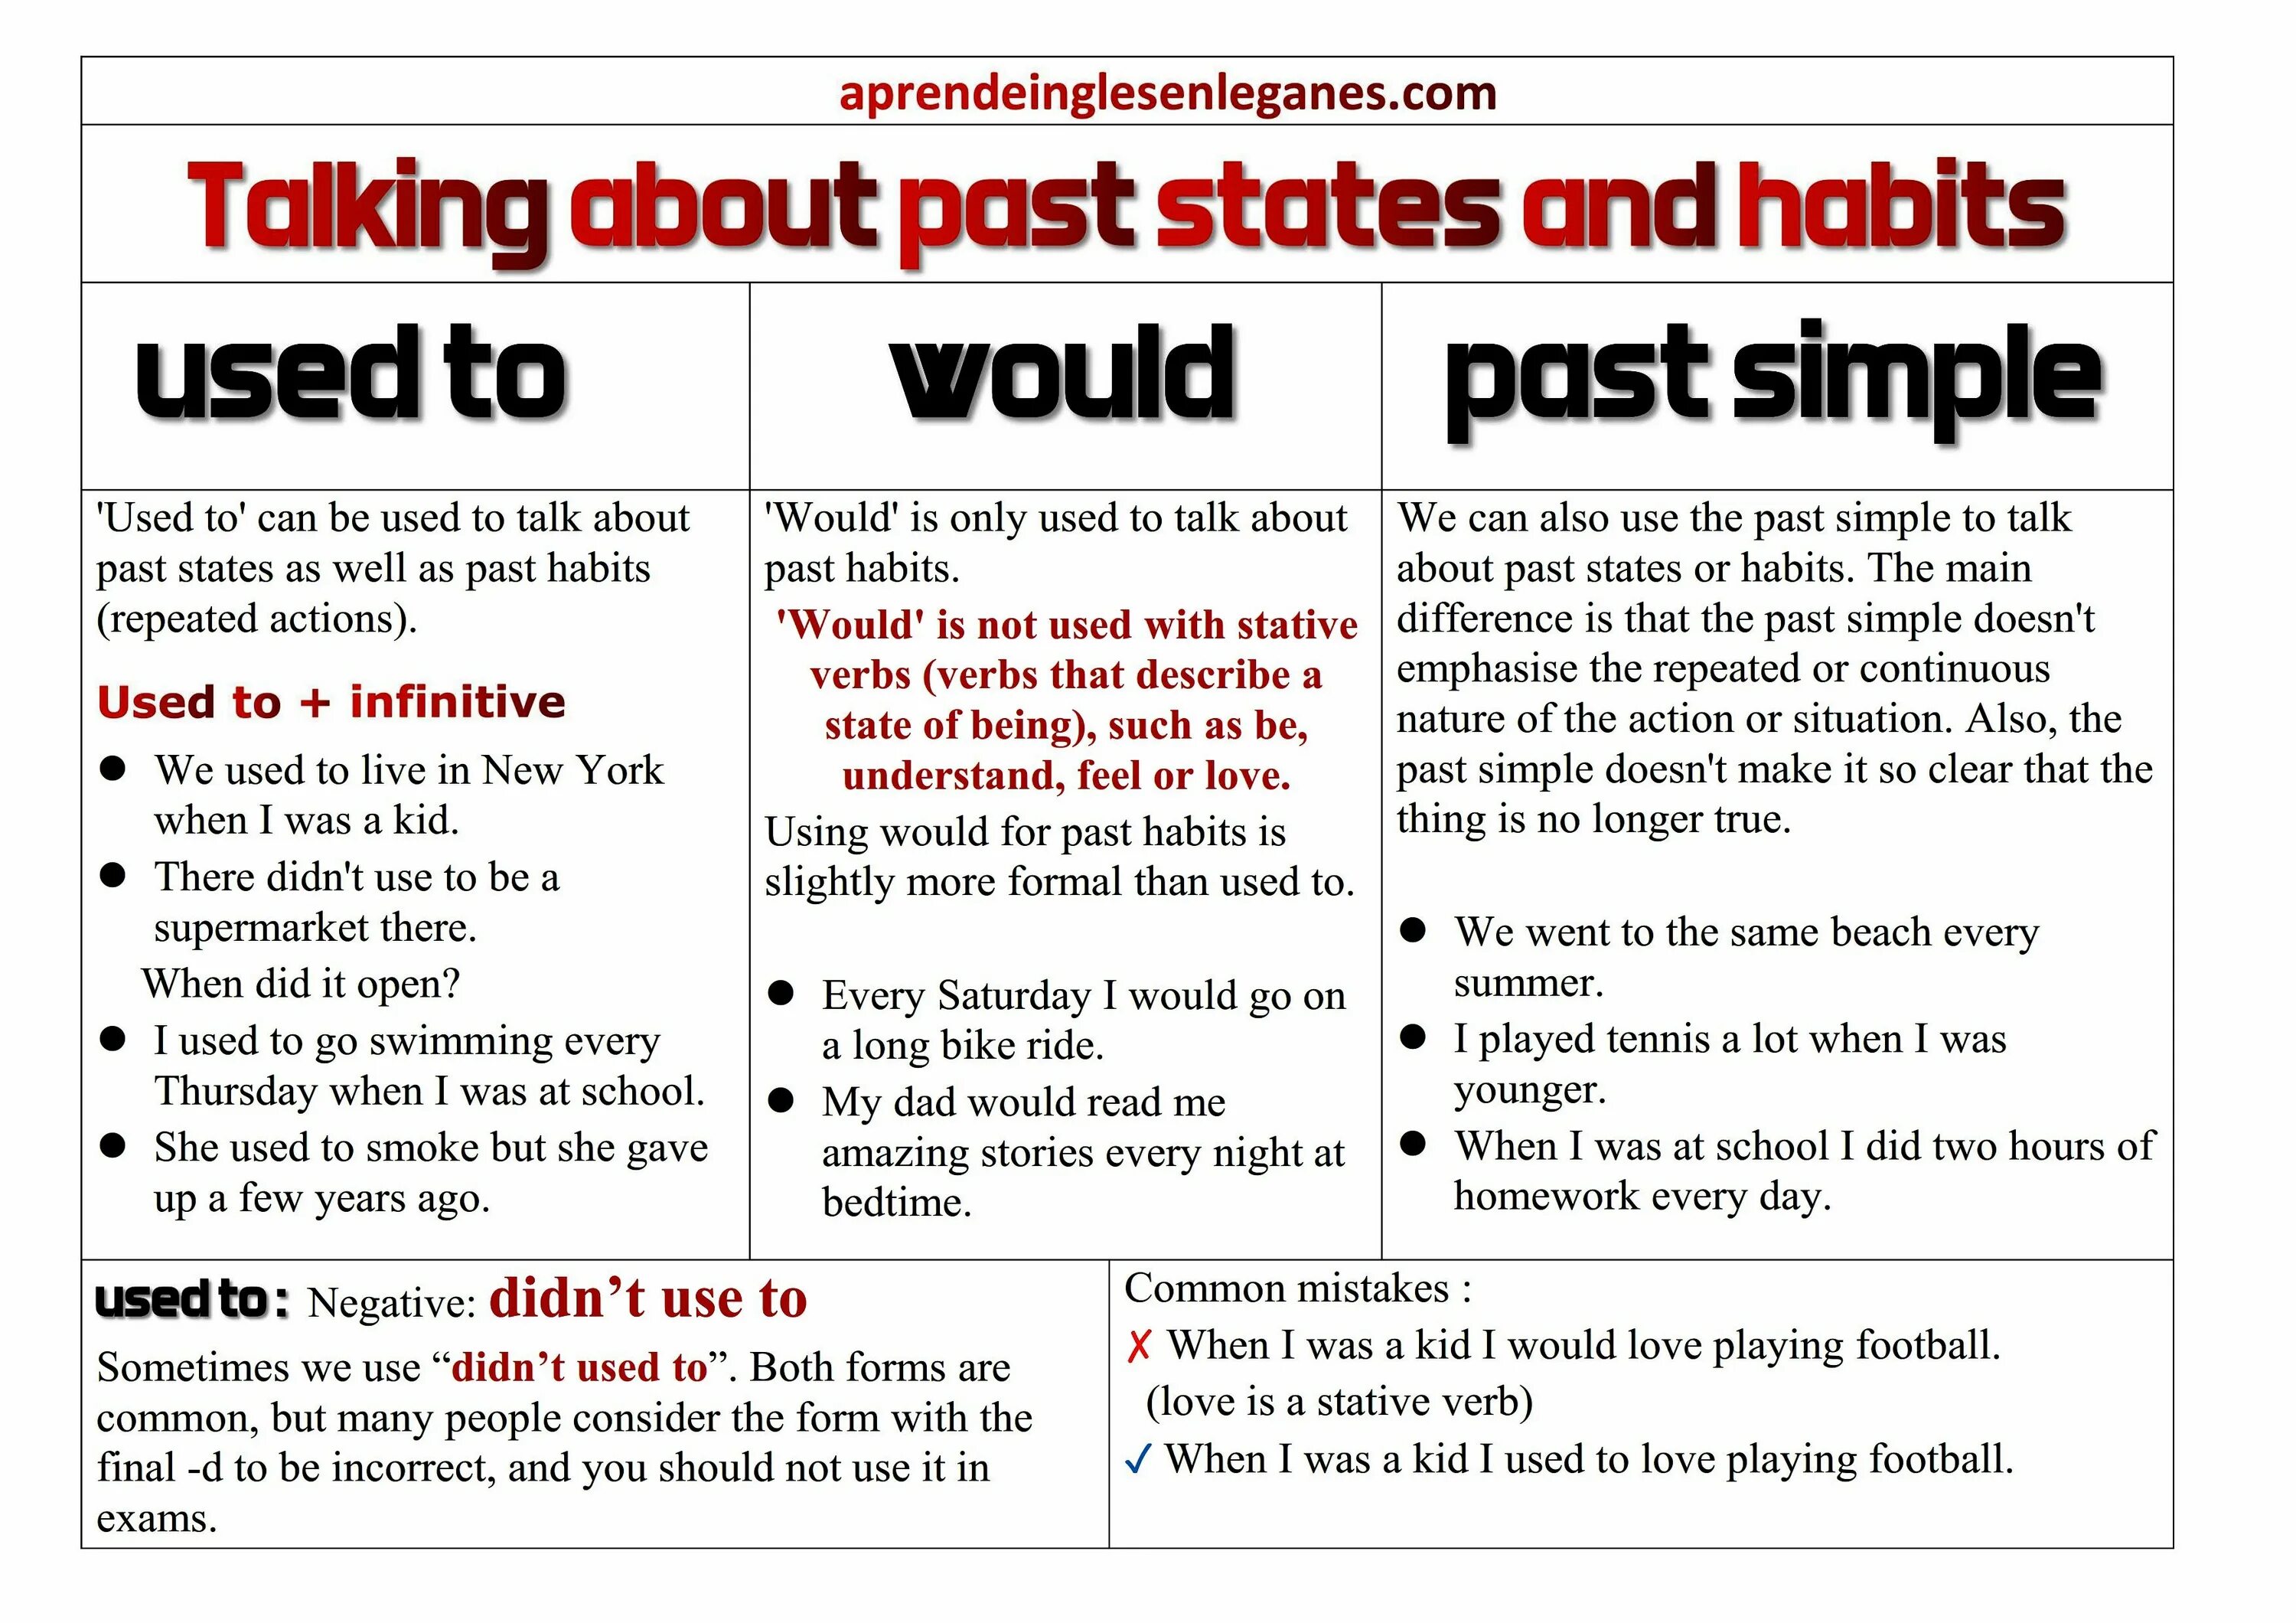 Past States. Present and past Habits. Past Habits used to правило. Past Habits. Talk в past